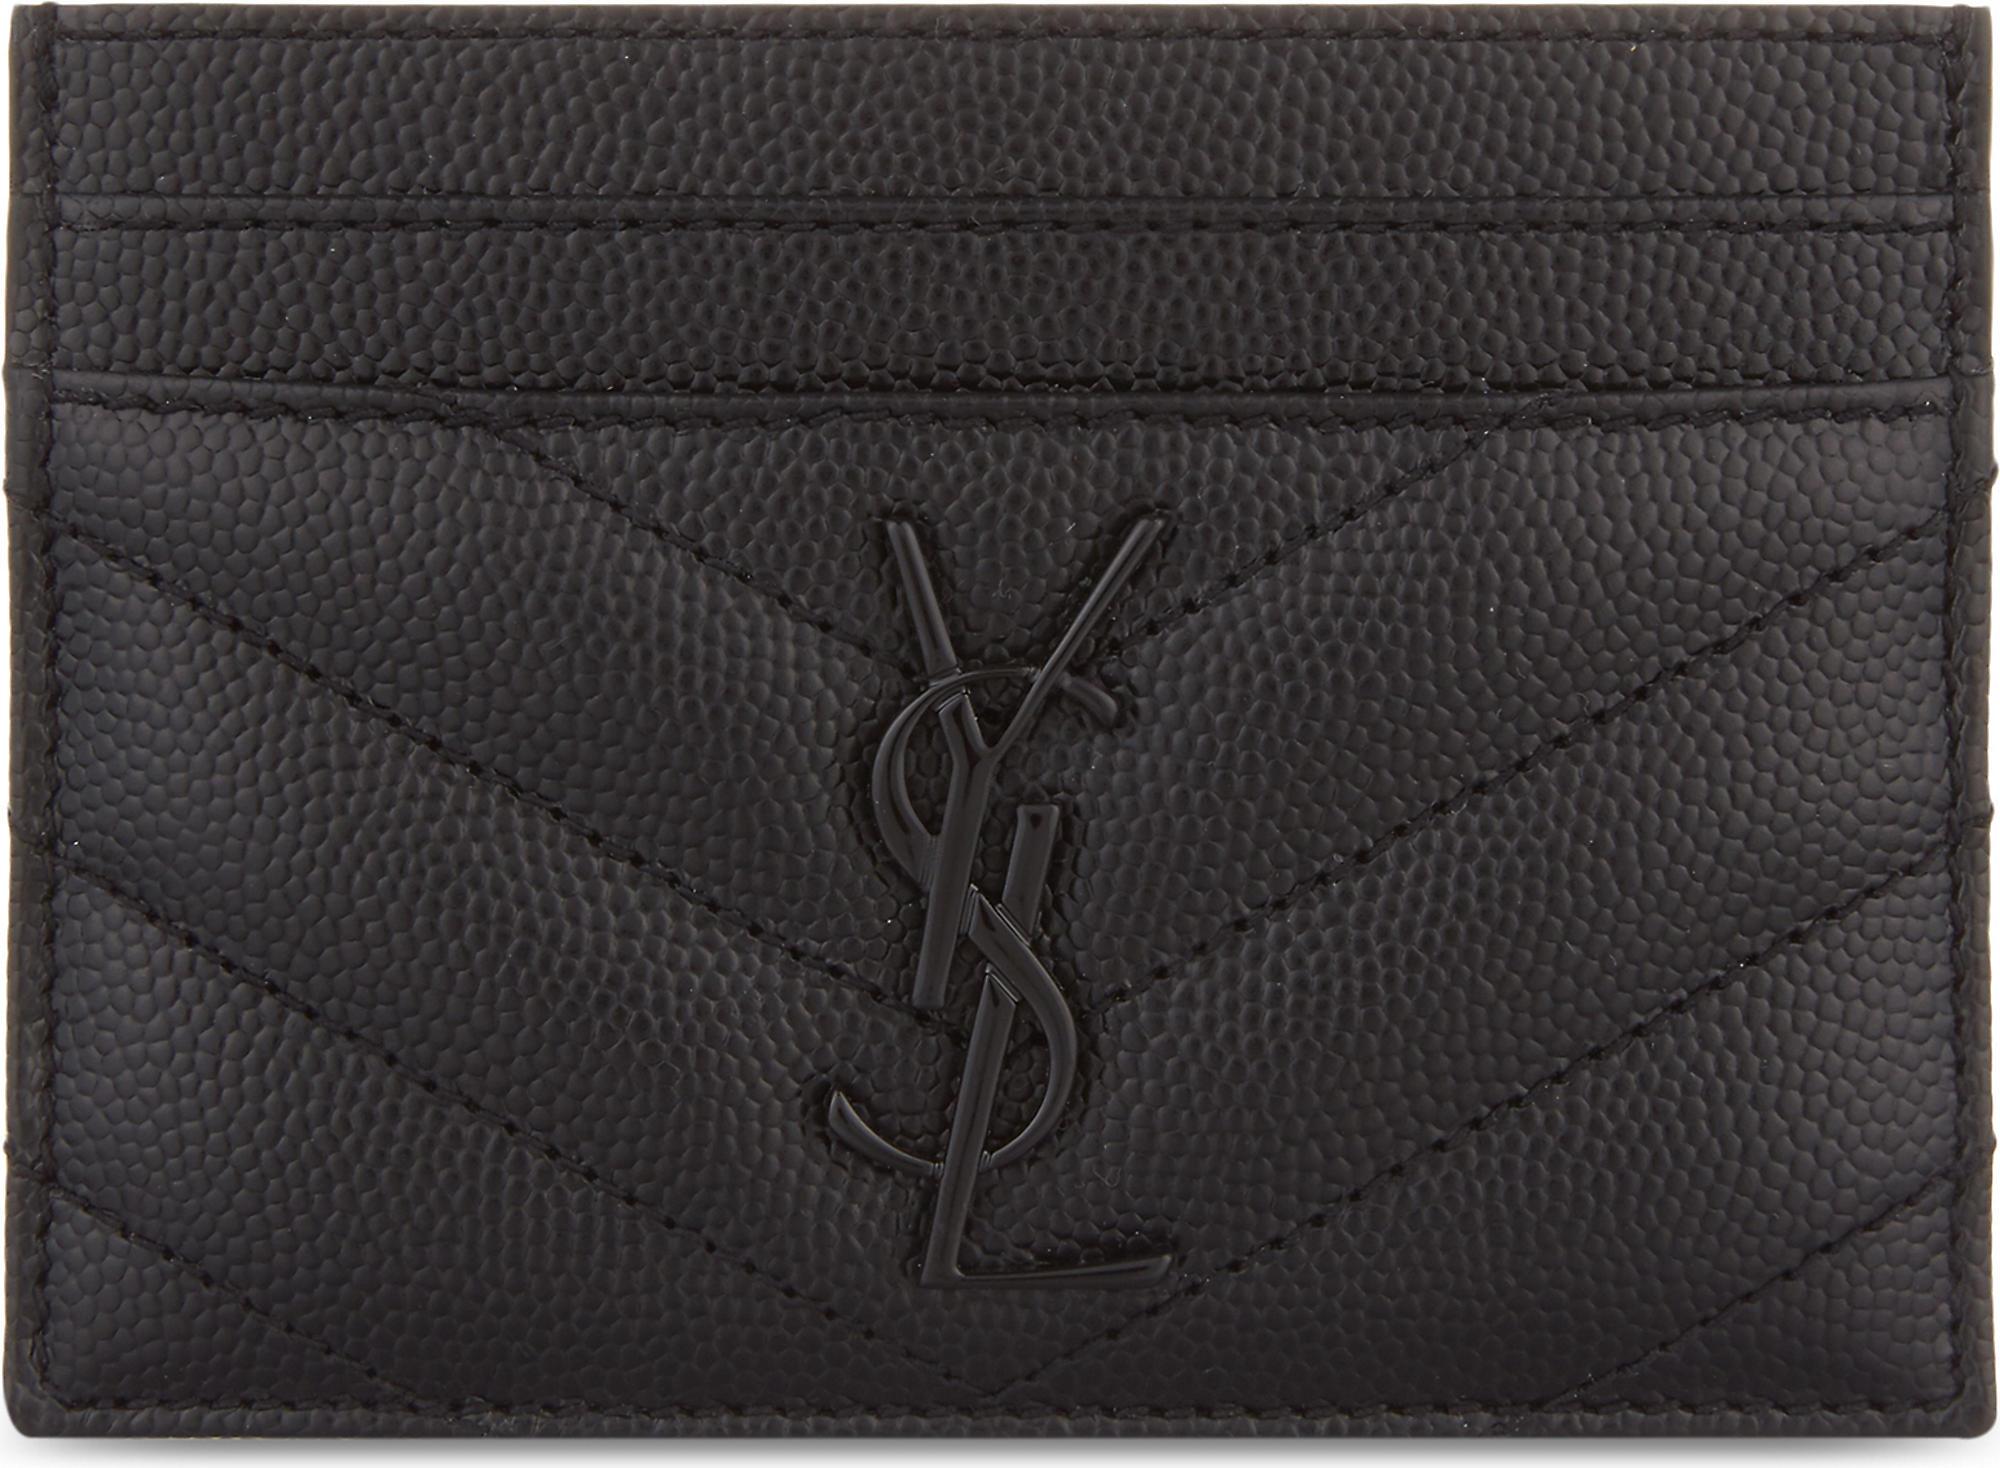 Saint Laurent Monogram Leather Card Holder in /b/l/a/c/k/ (Black